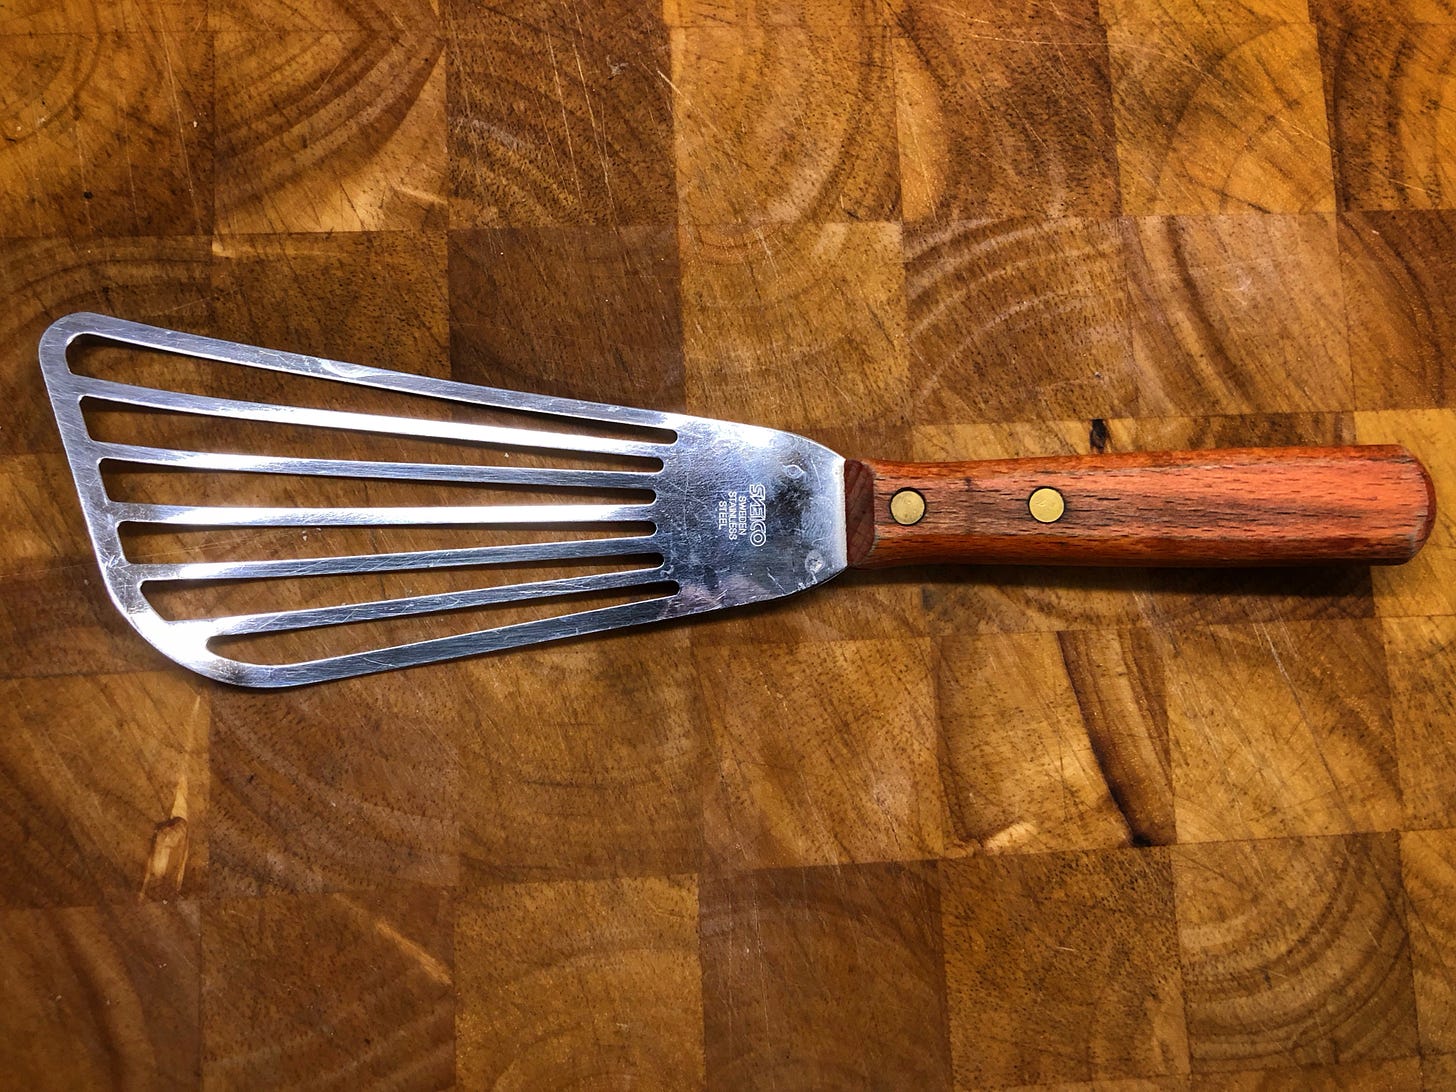 Wood-handled metal fish spatula on a cutting board